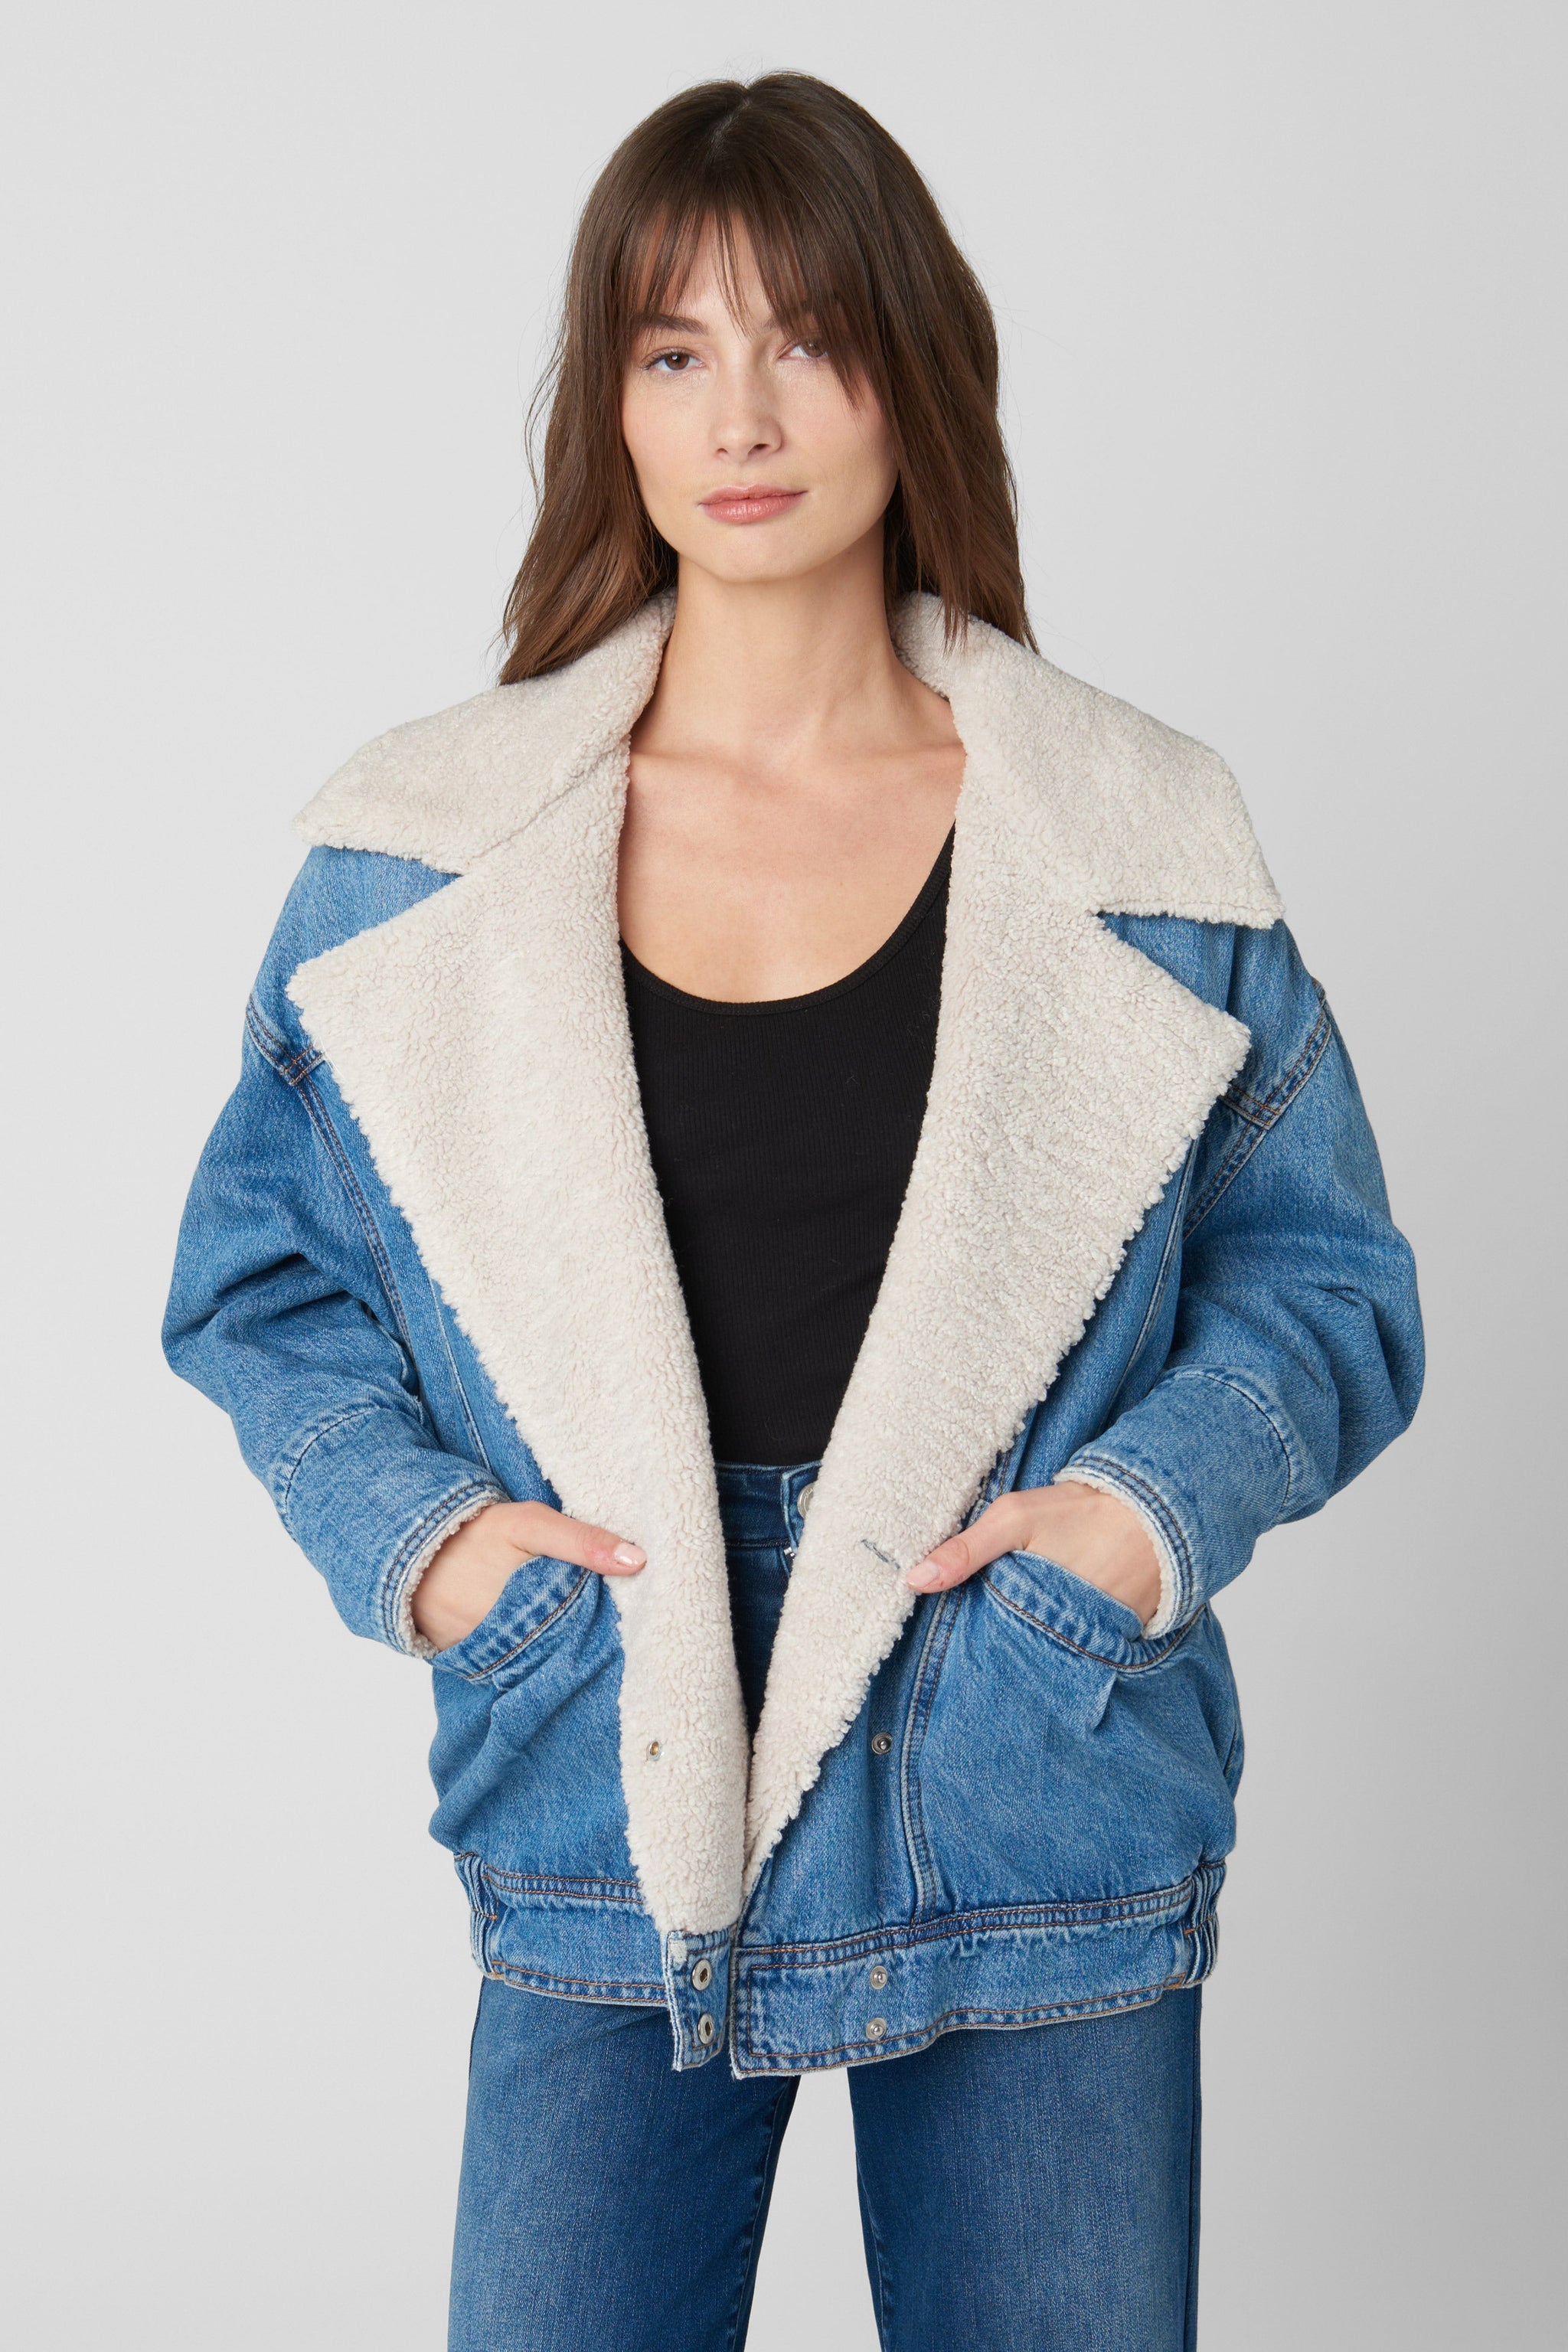 Women's Clothing - GenesinlifeShops - NHILLC1 denim jacket